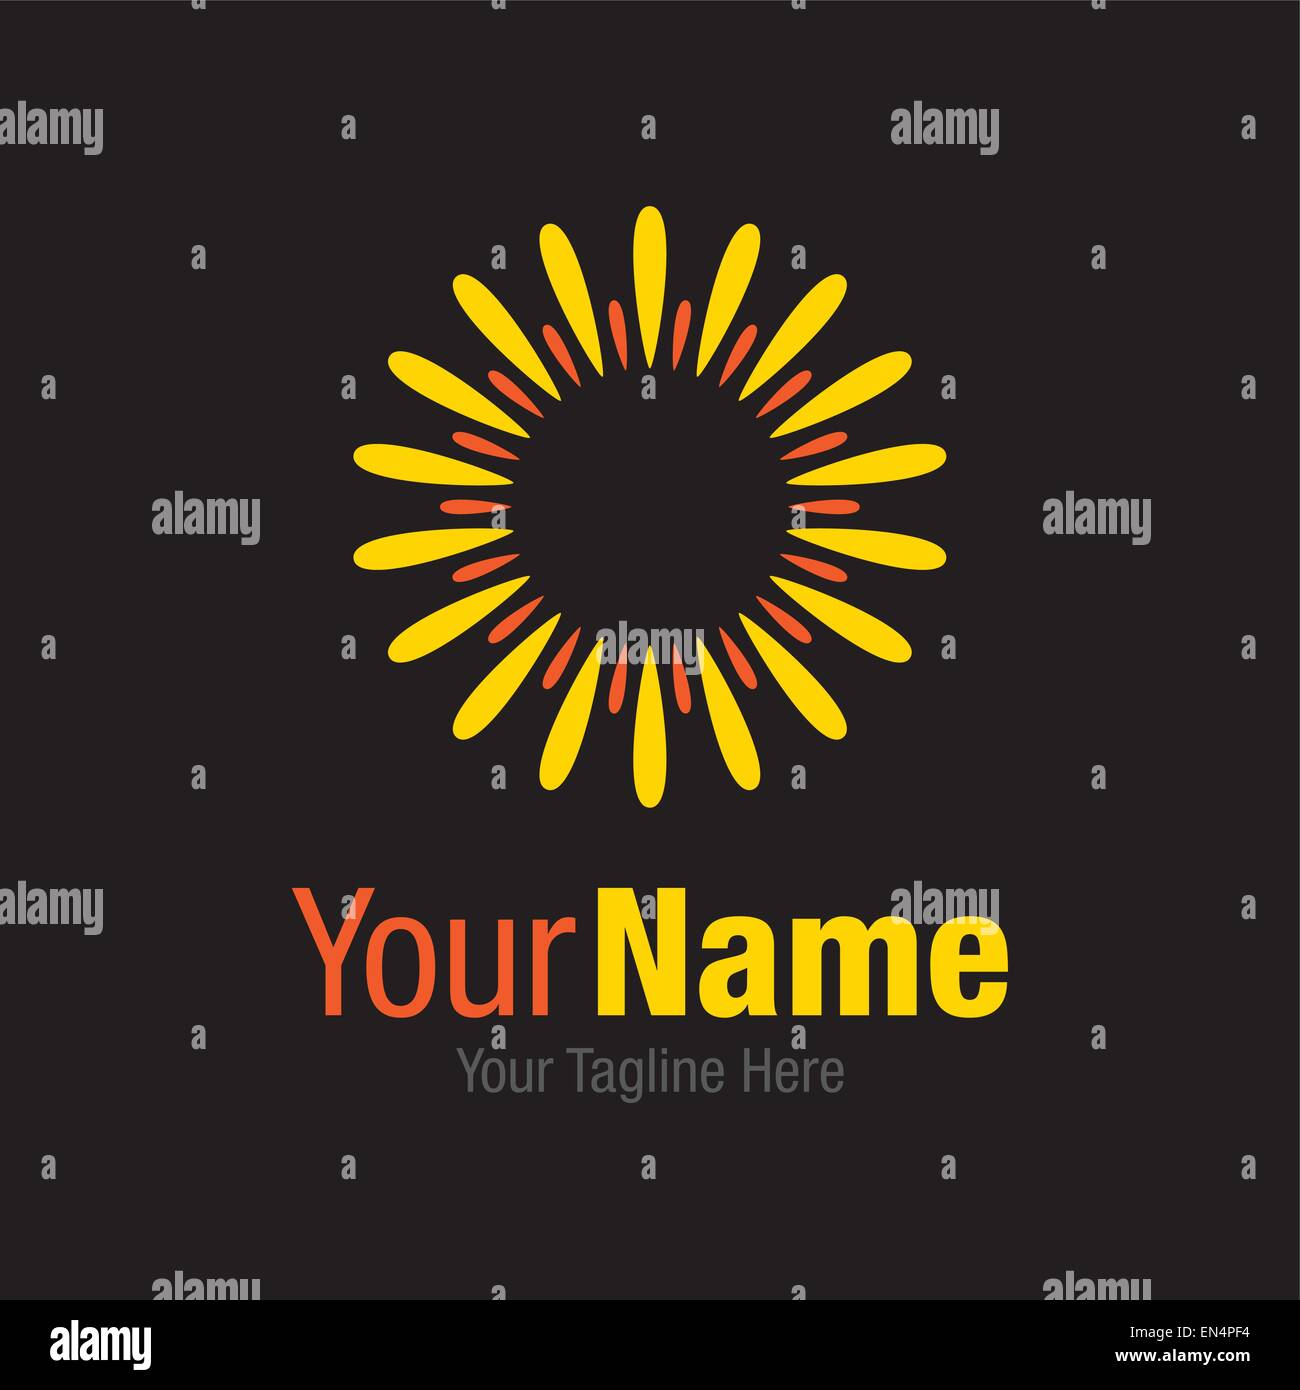 Beautiful elegant sunflower abstract yellow black graphic design logo icon Stock Vector